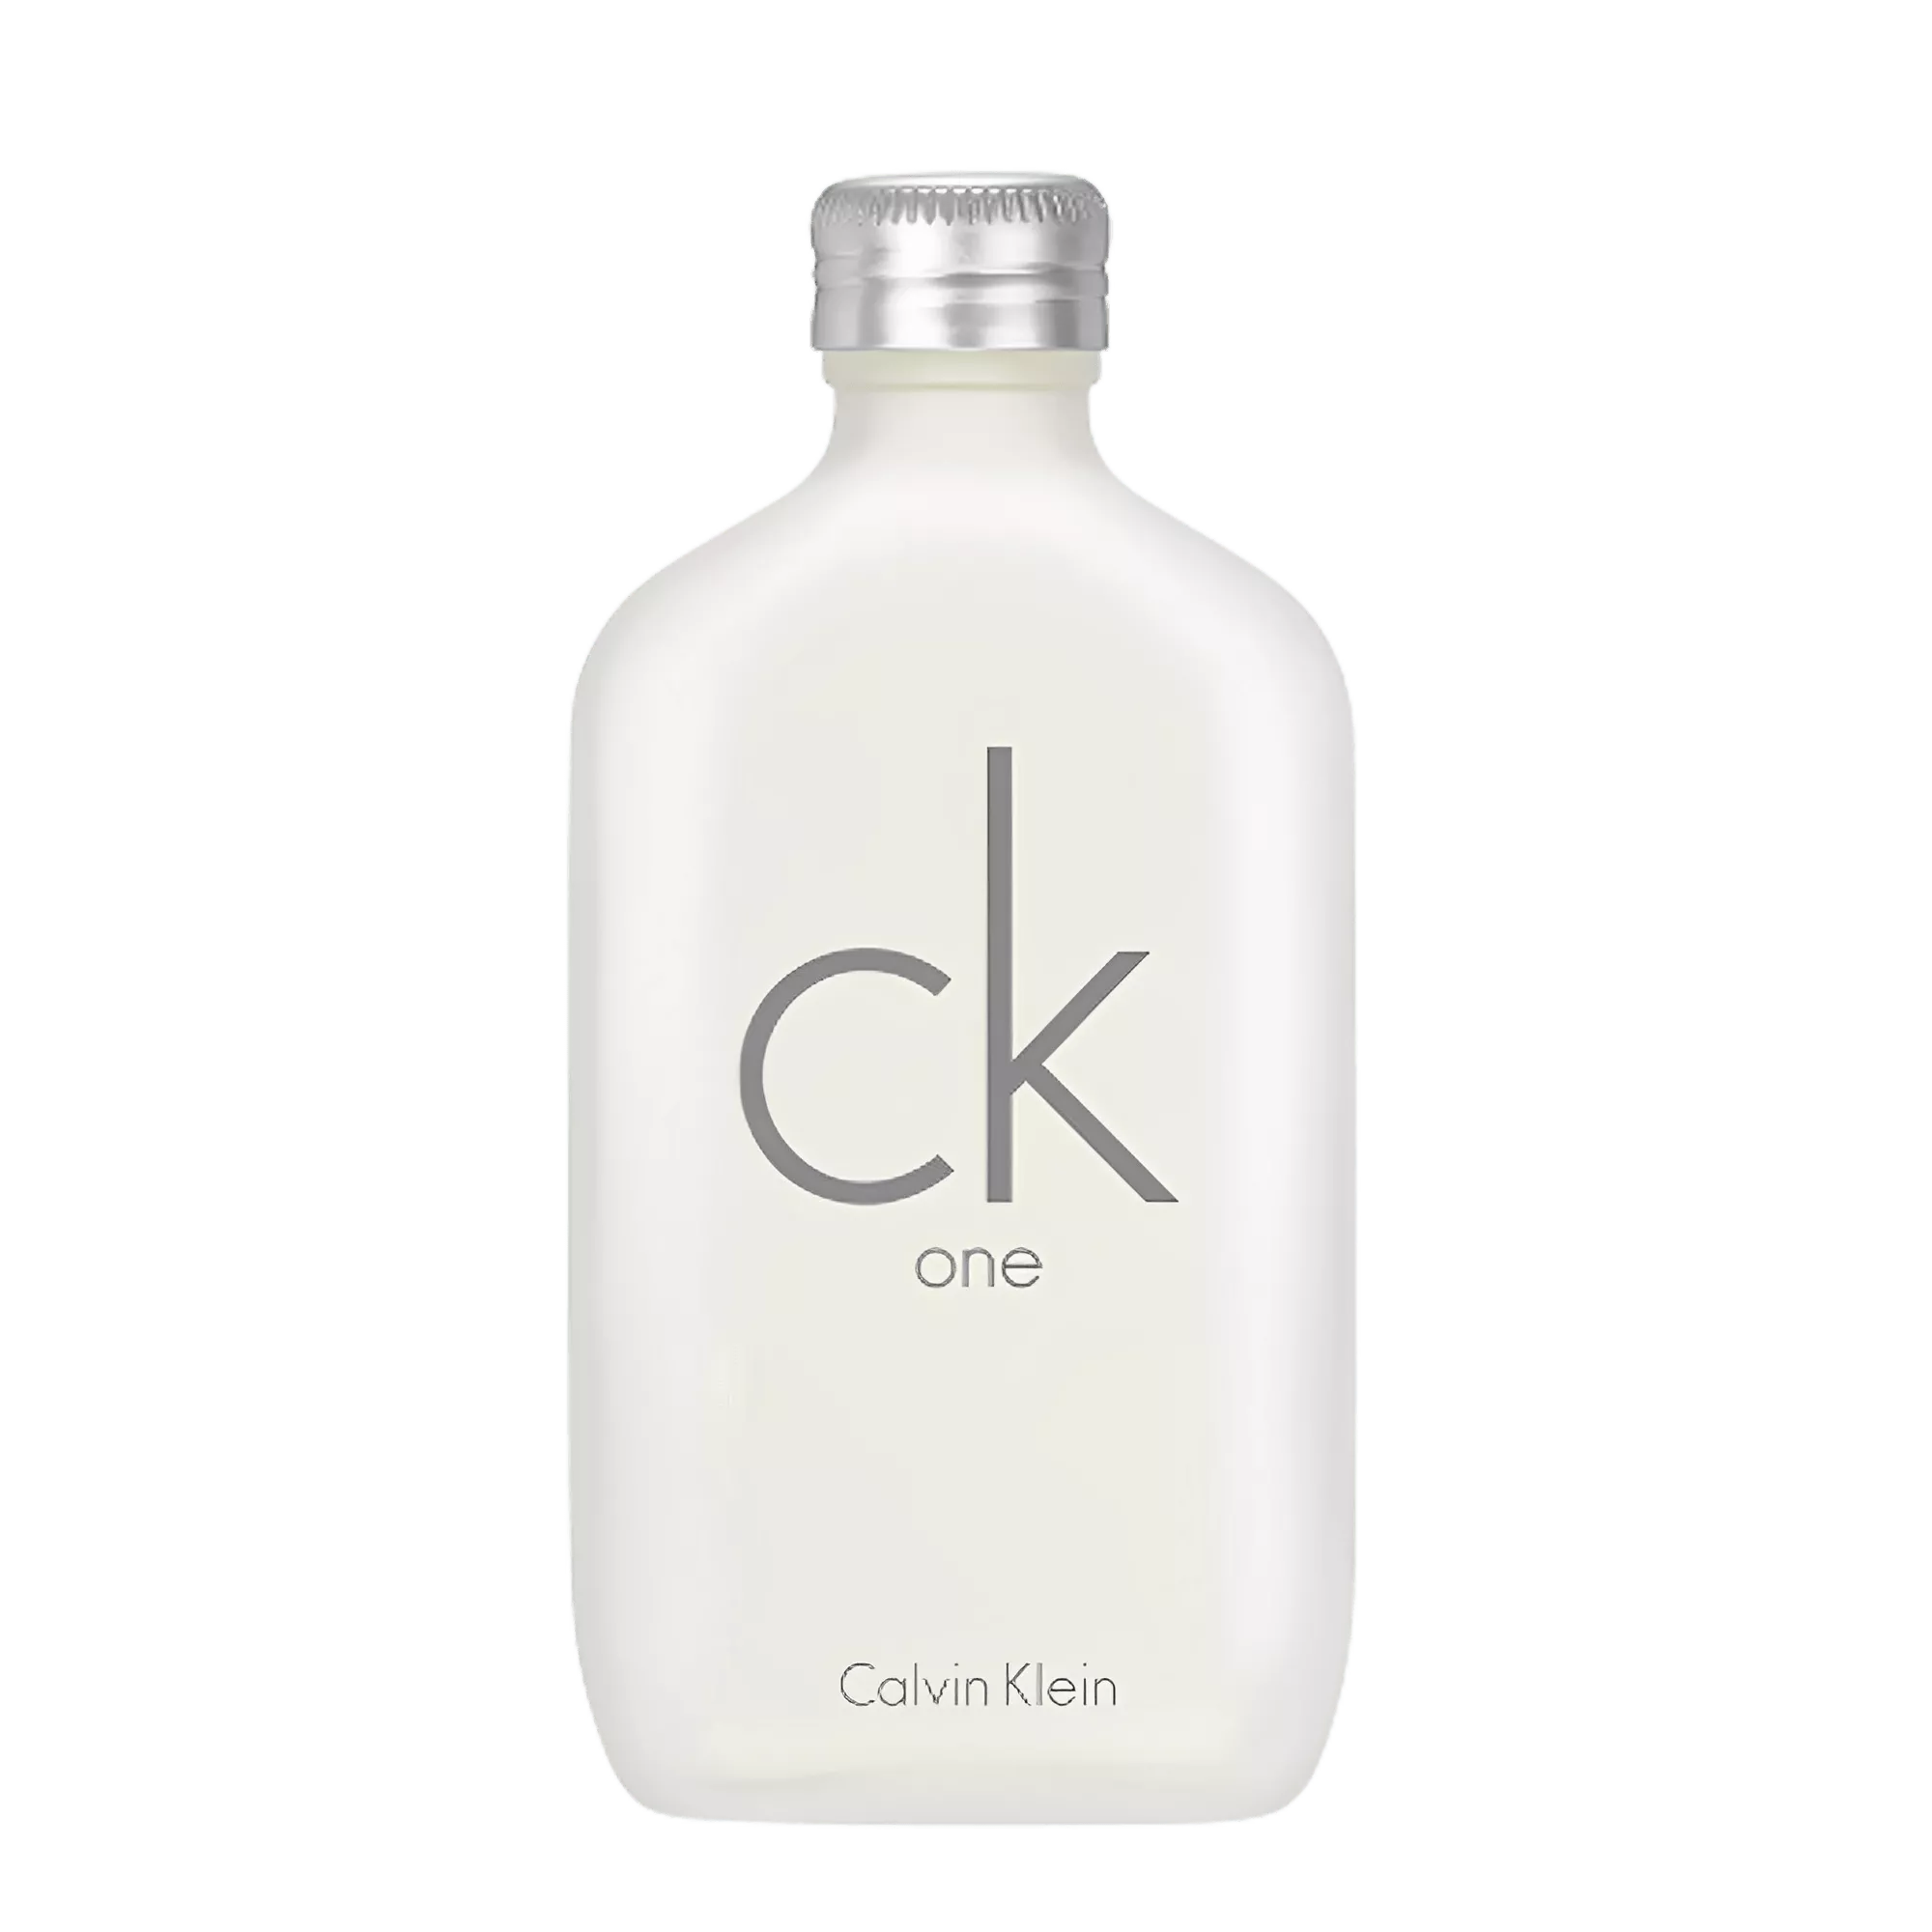 Calvin Klein Ck One Eau De Toilette - Perfume Unissex 200ml